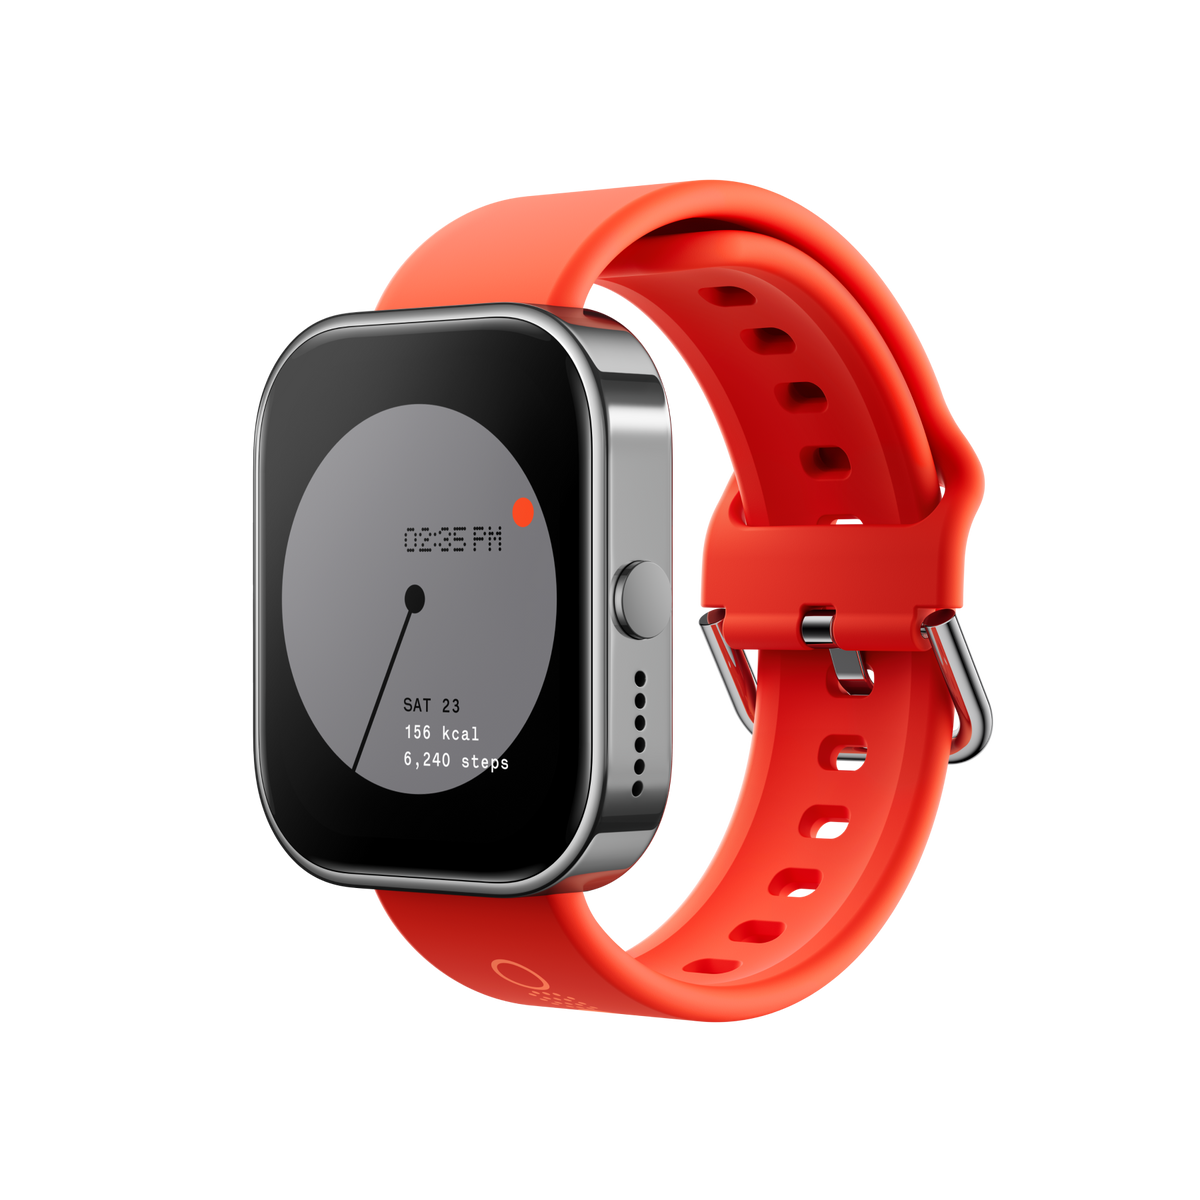 Bluetooth smart watch iPhone BRAND NEW | eBay